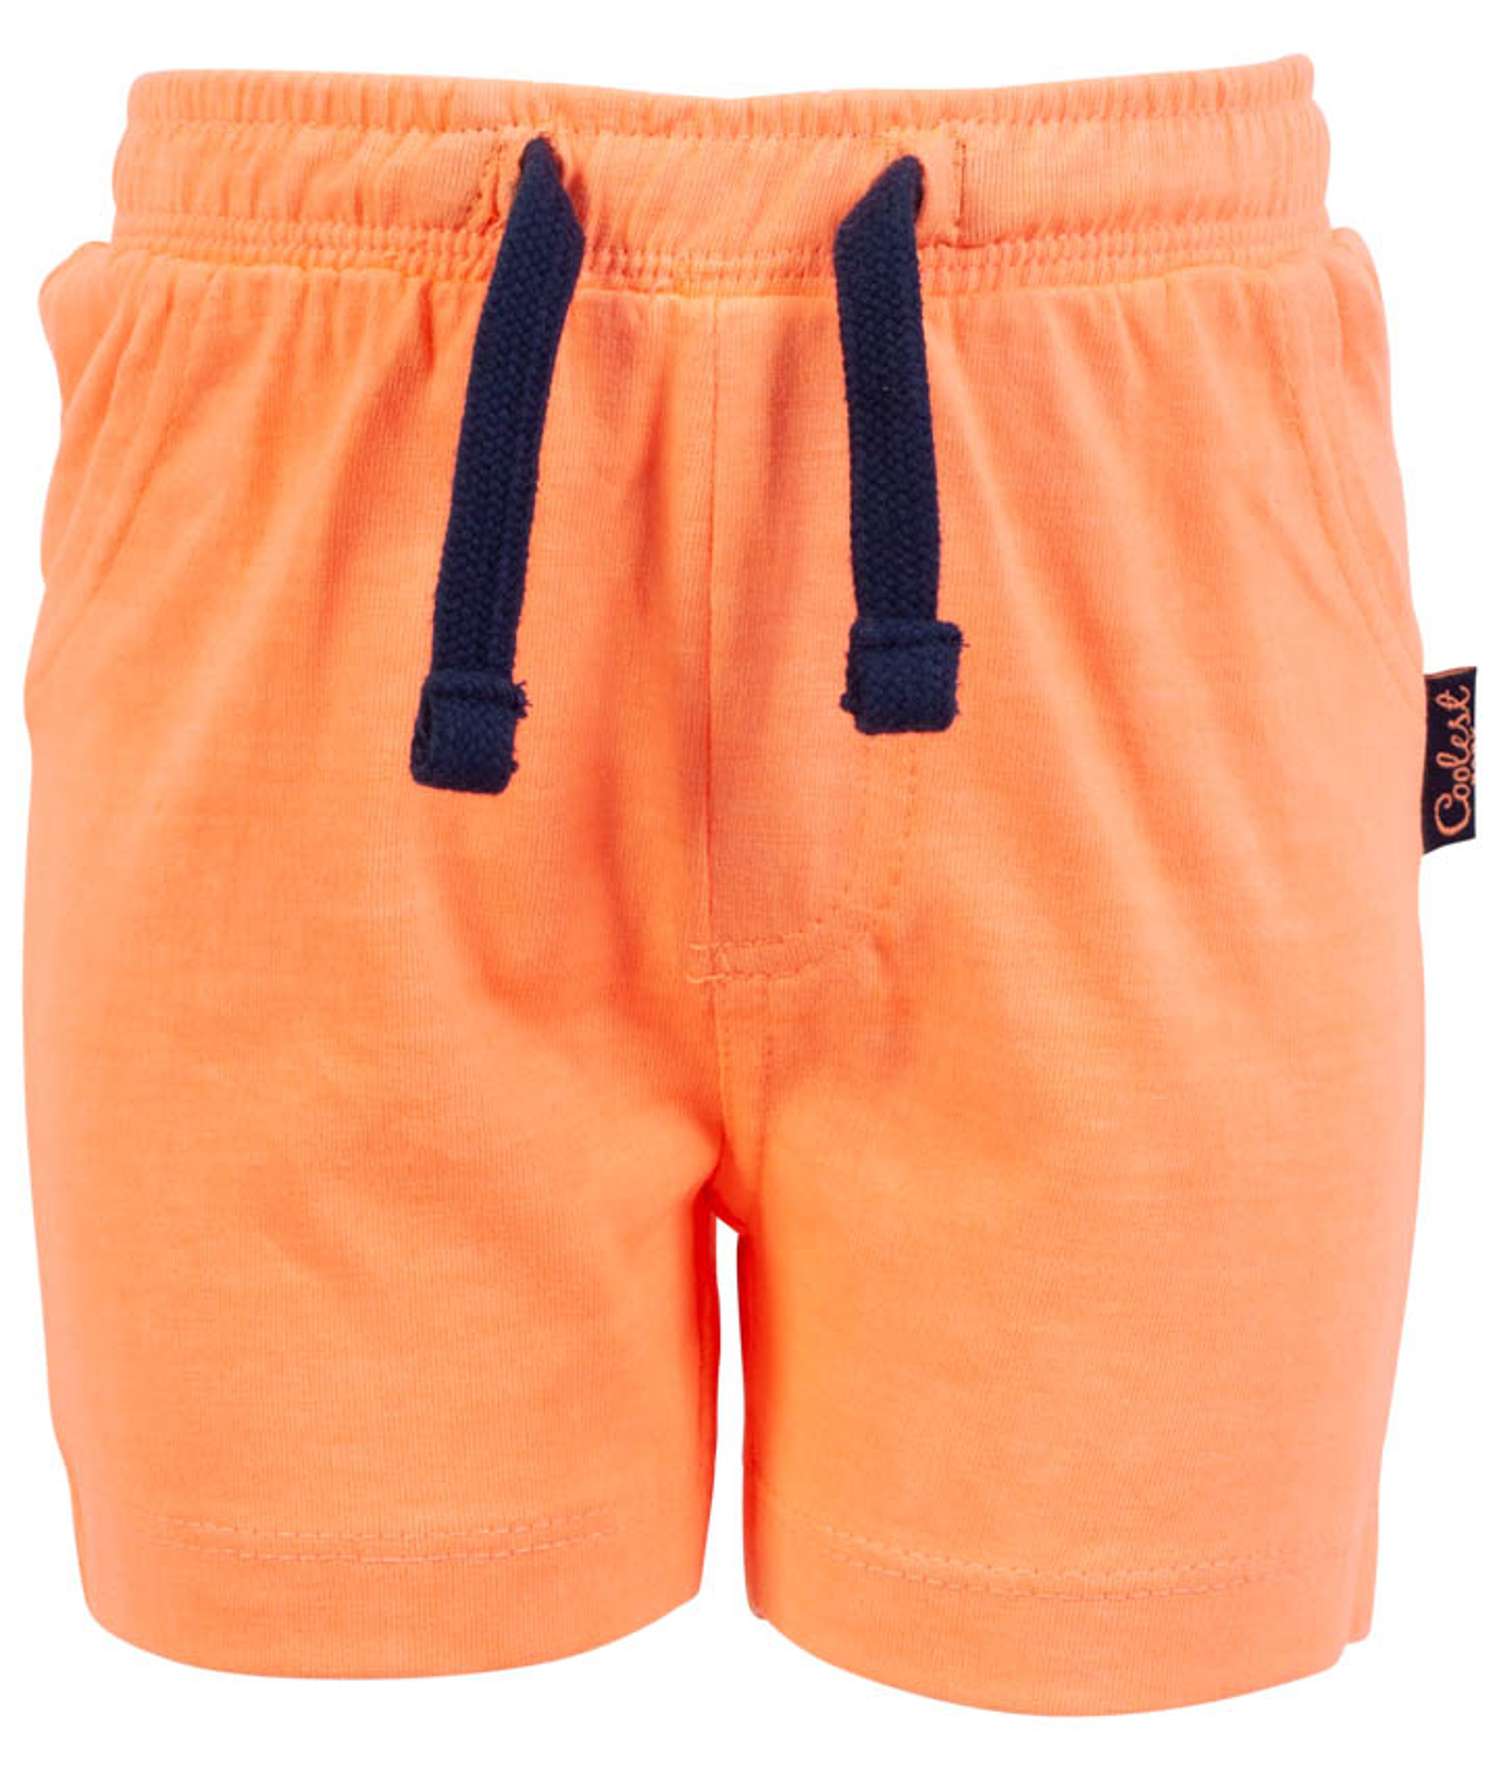 Knot so bad Drenge shorts - Orange - Str. 62